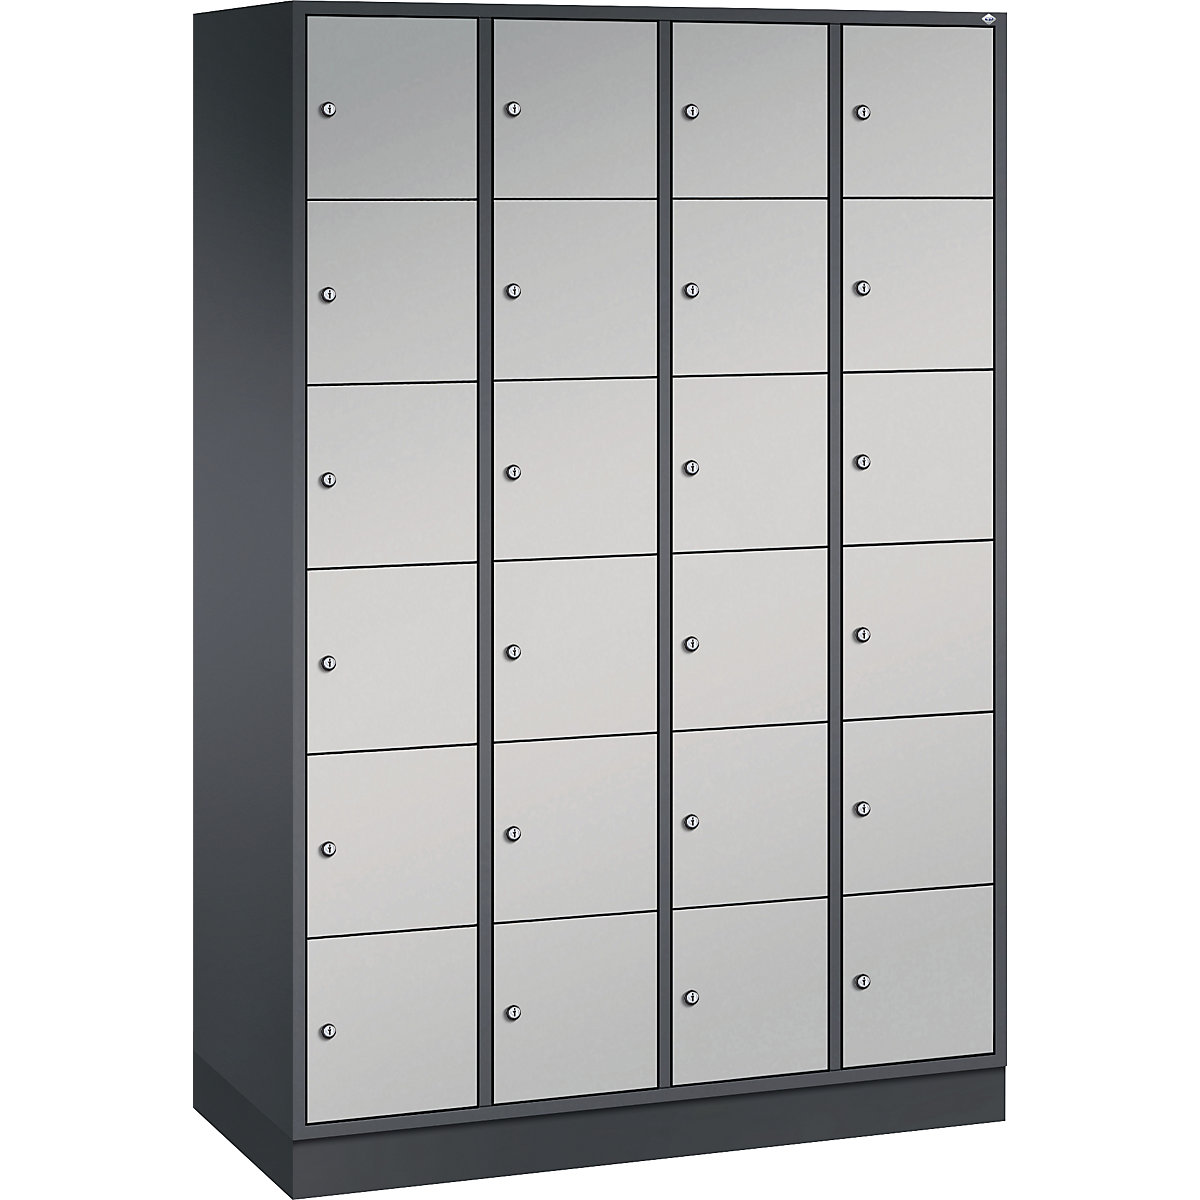 INTRO steel compartment locker, compartment height 285 mm – C+P, WxD 1220 x 500 mm, 24 compartments, black grey body, white aluminium doors-15